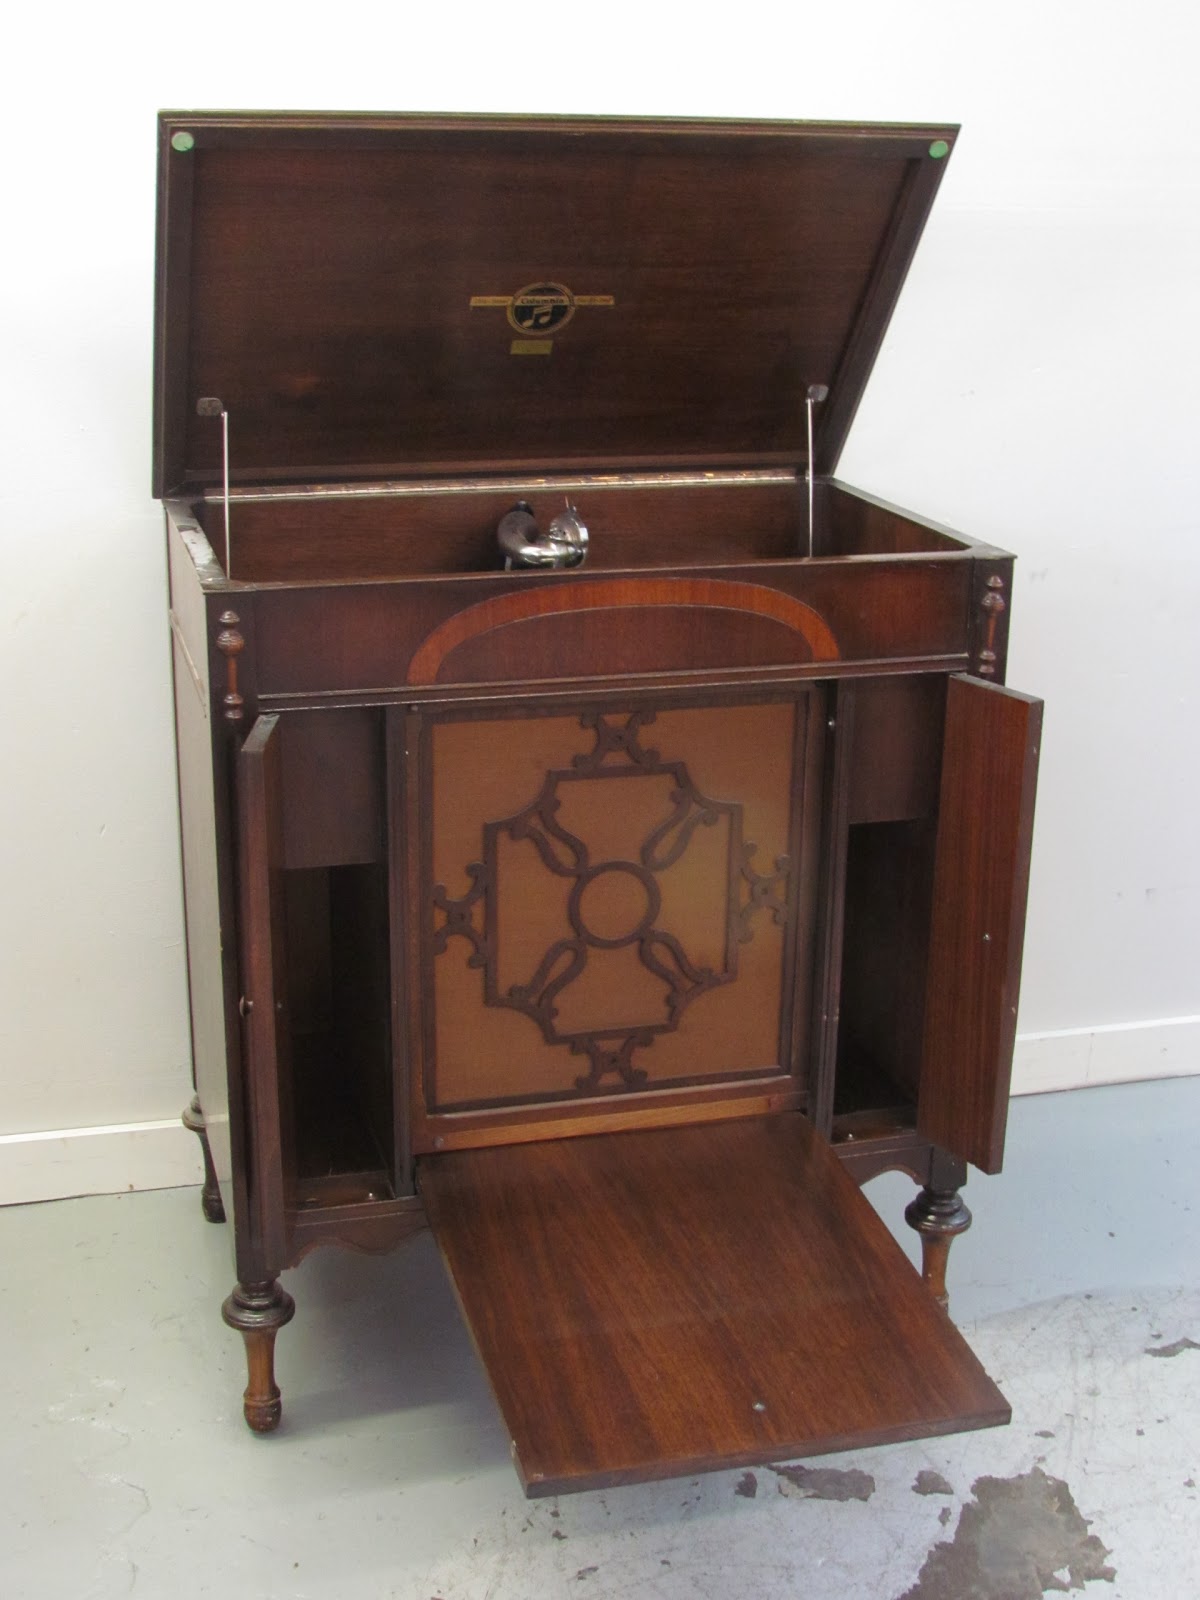  Harrison Furniture Company: Columbia Grafonola Cabinet Phonograph